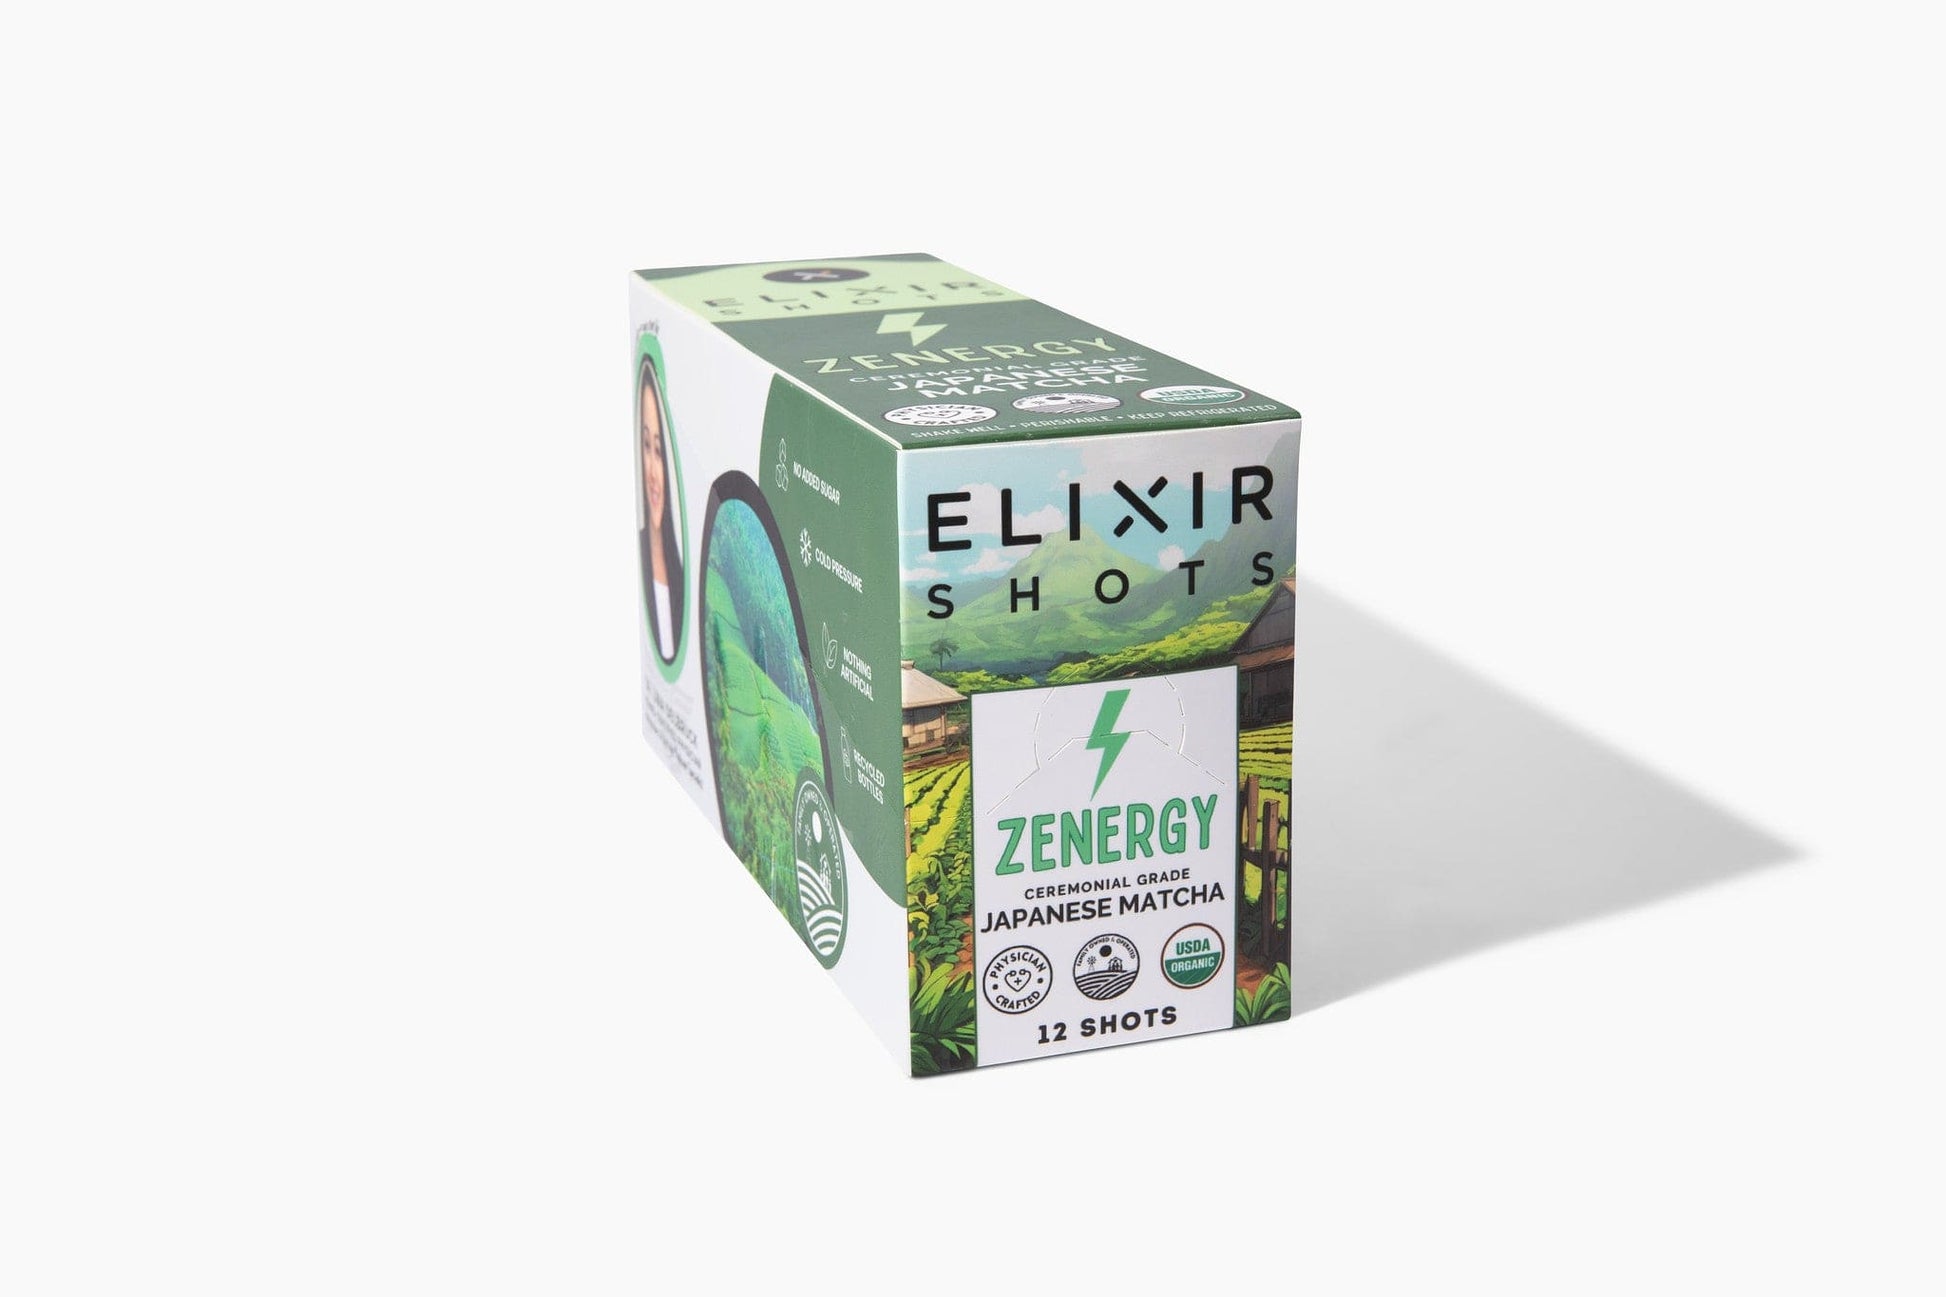 Elixir Shots Wellness Shots Zenergy